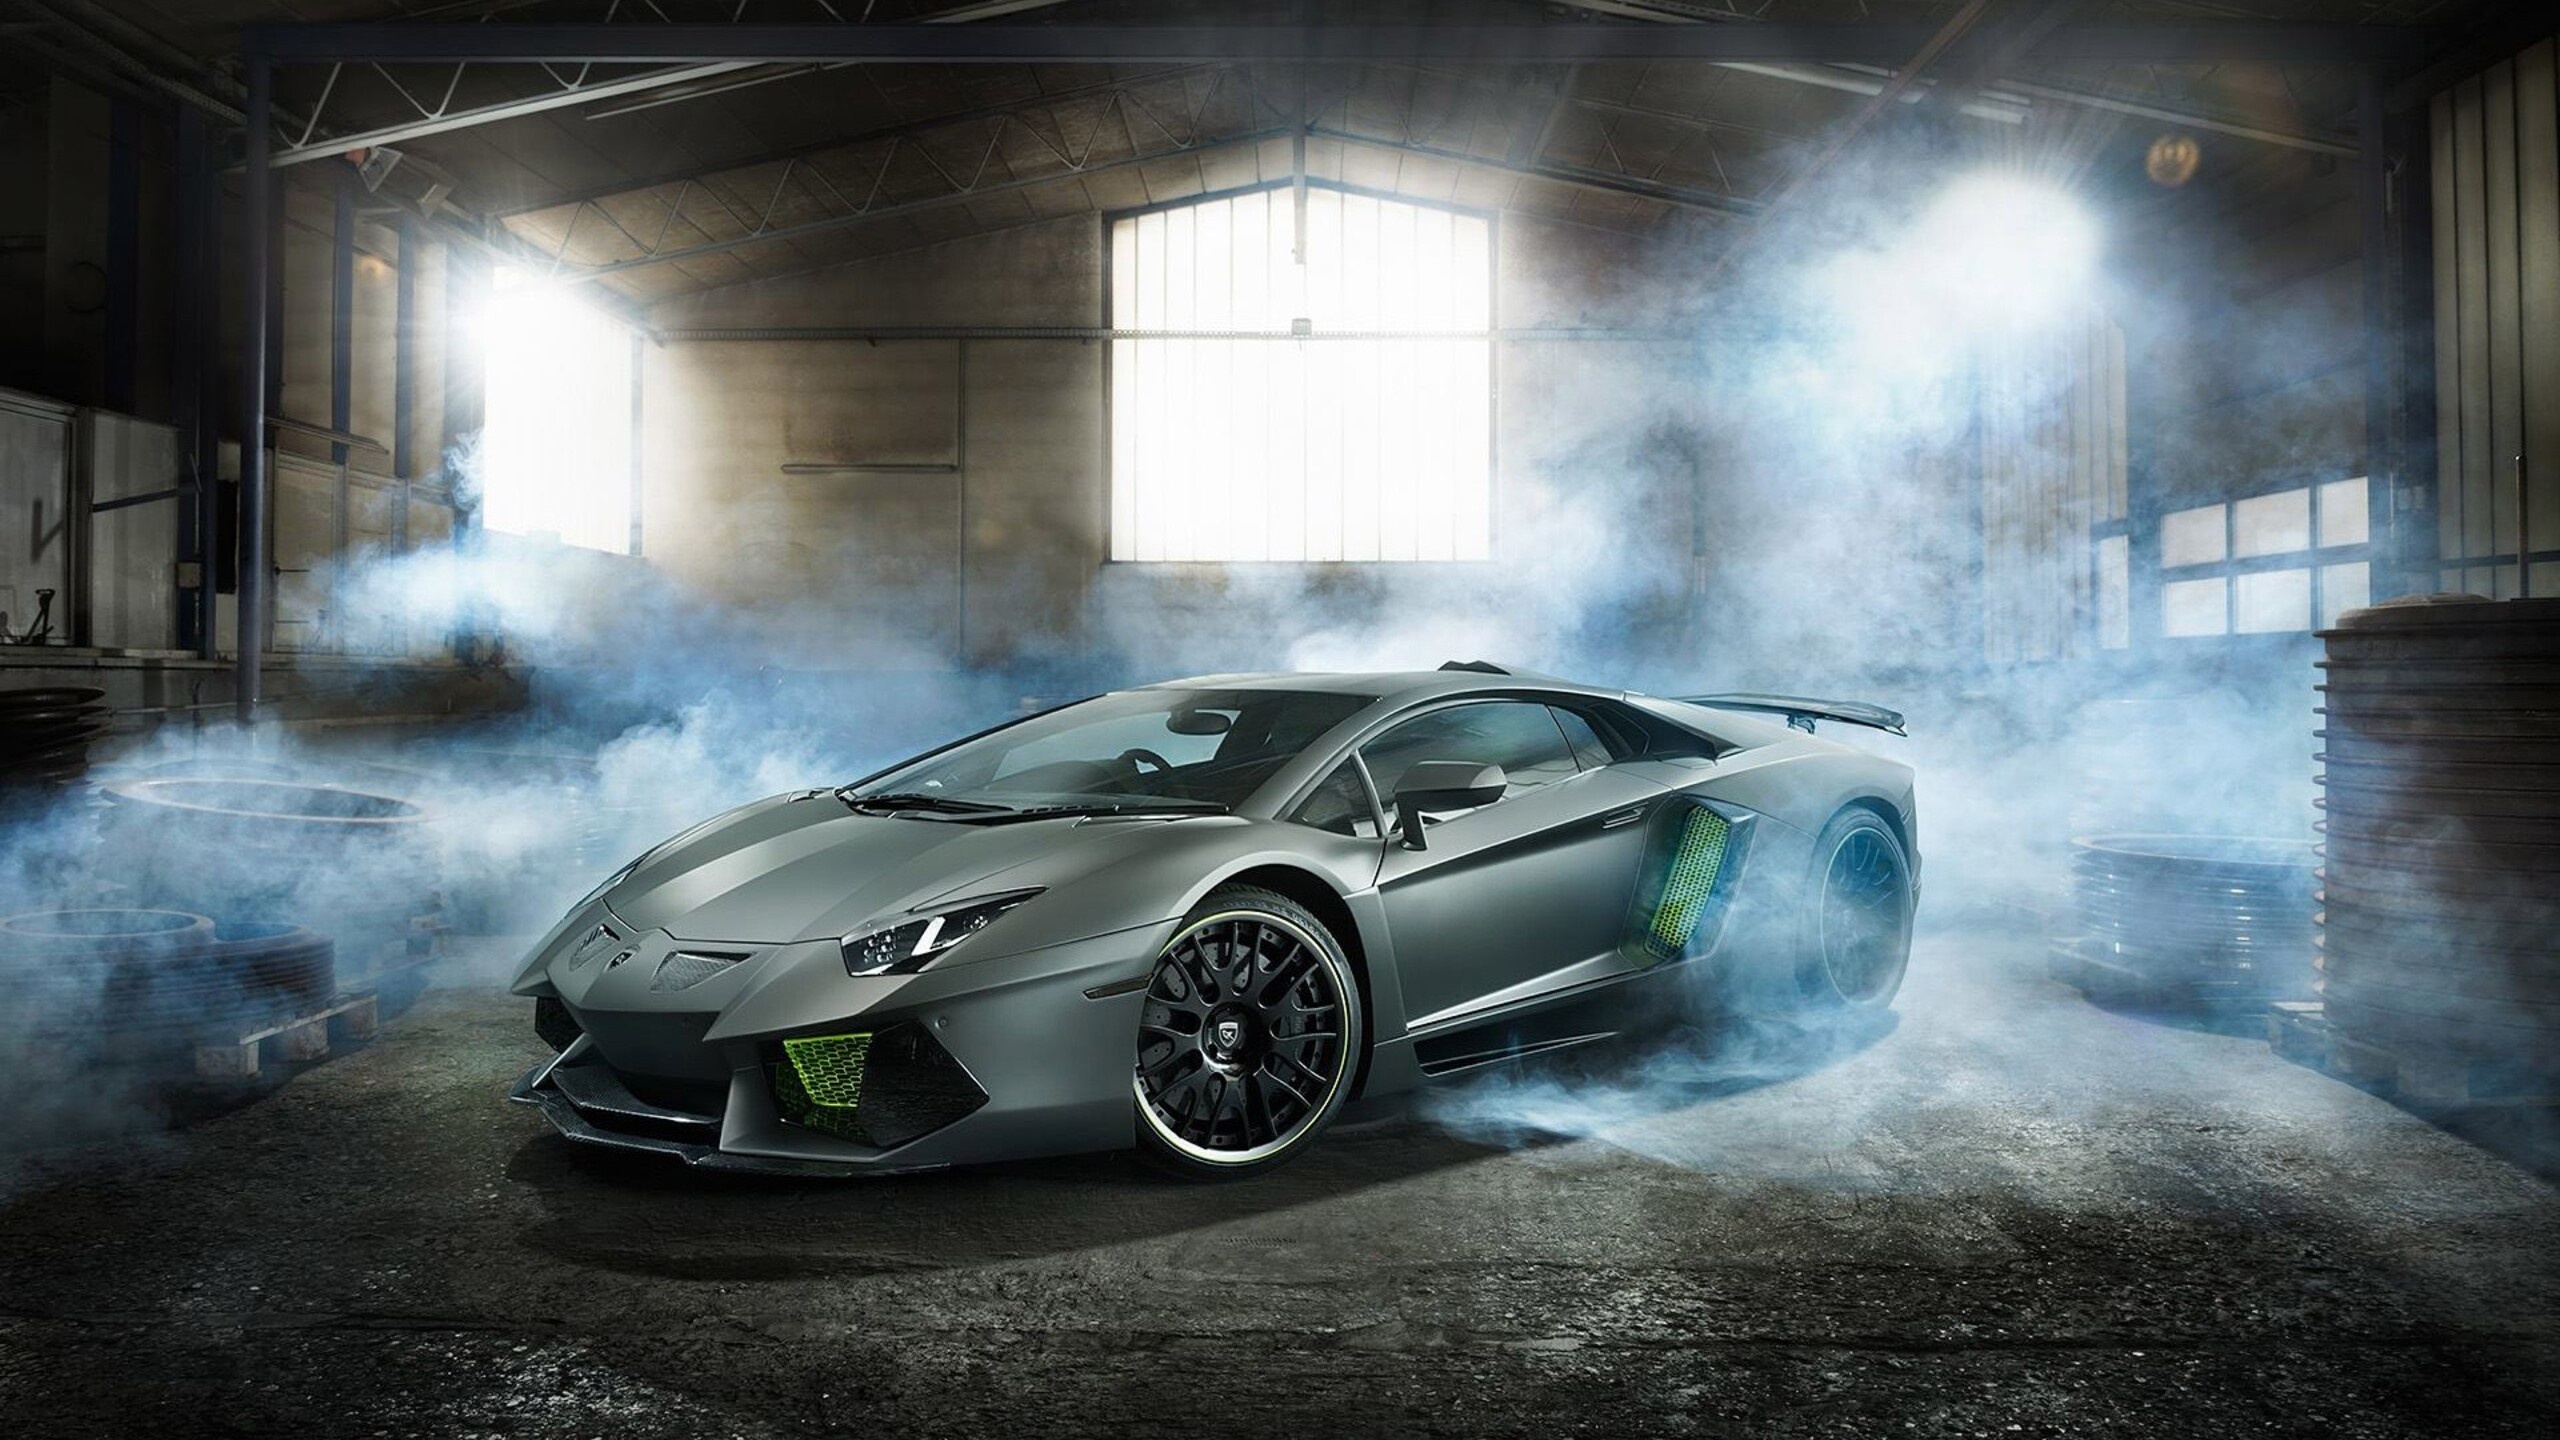 Lamborghini Aventador, Desktop wallpaper, 1440p resolution, Stunning visuals, 2560x1440 HD Desktop